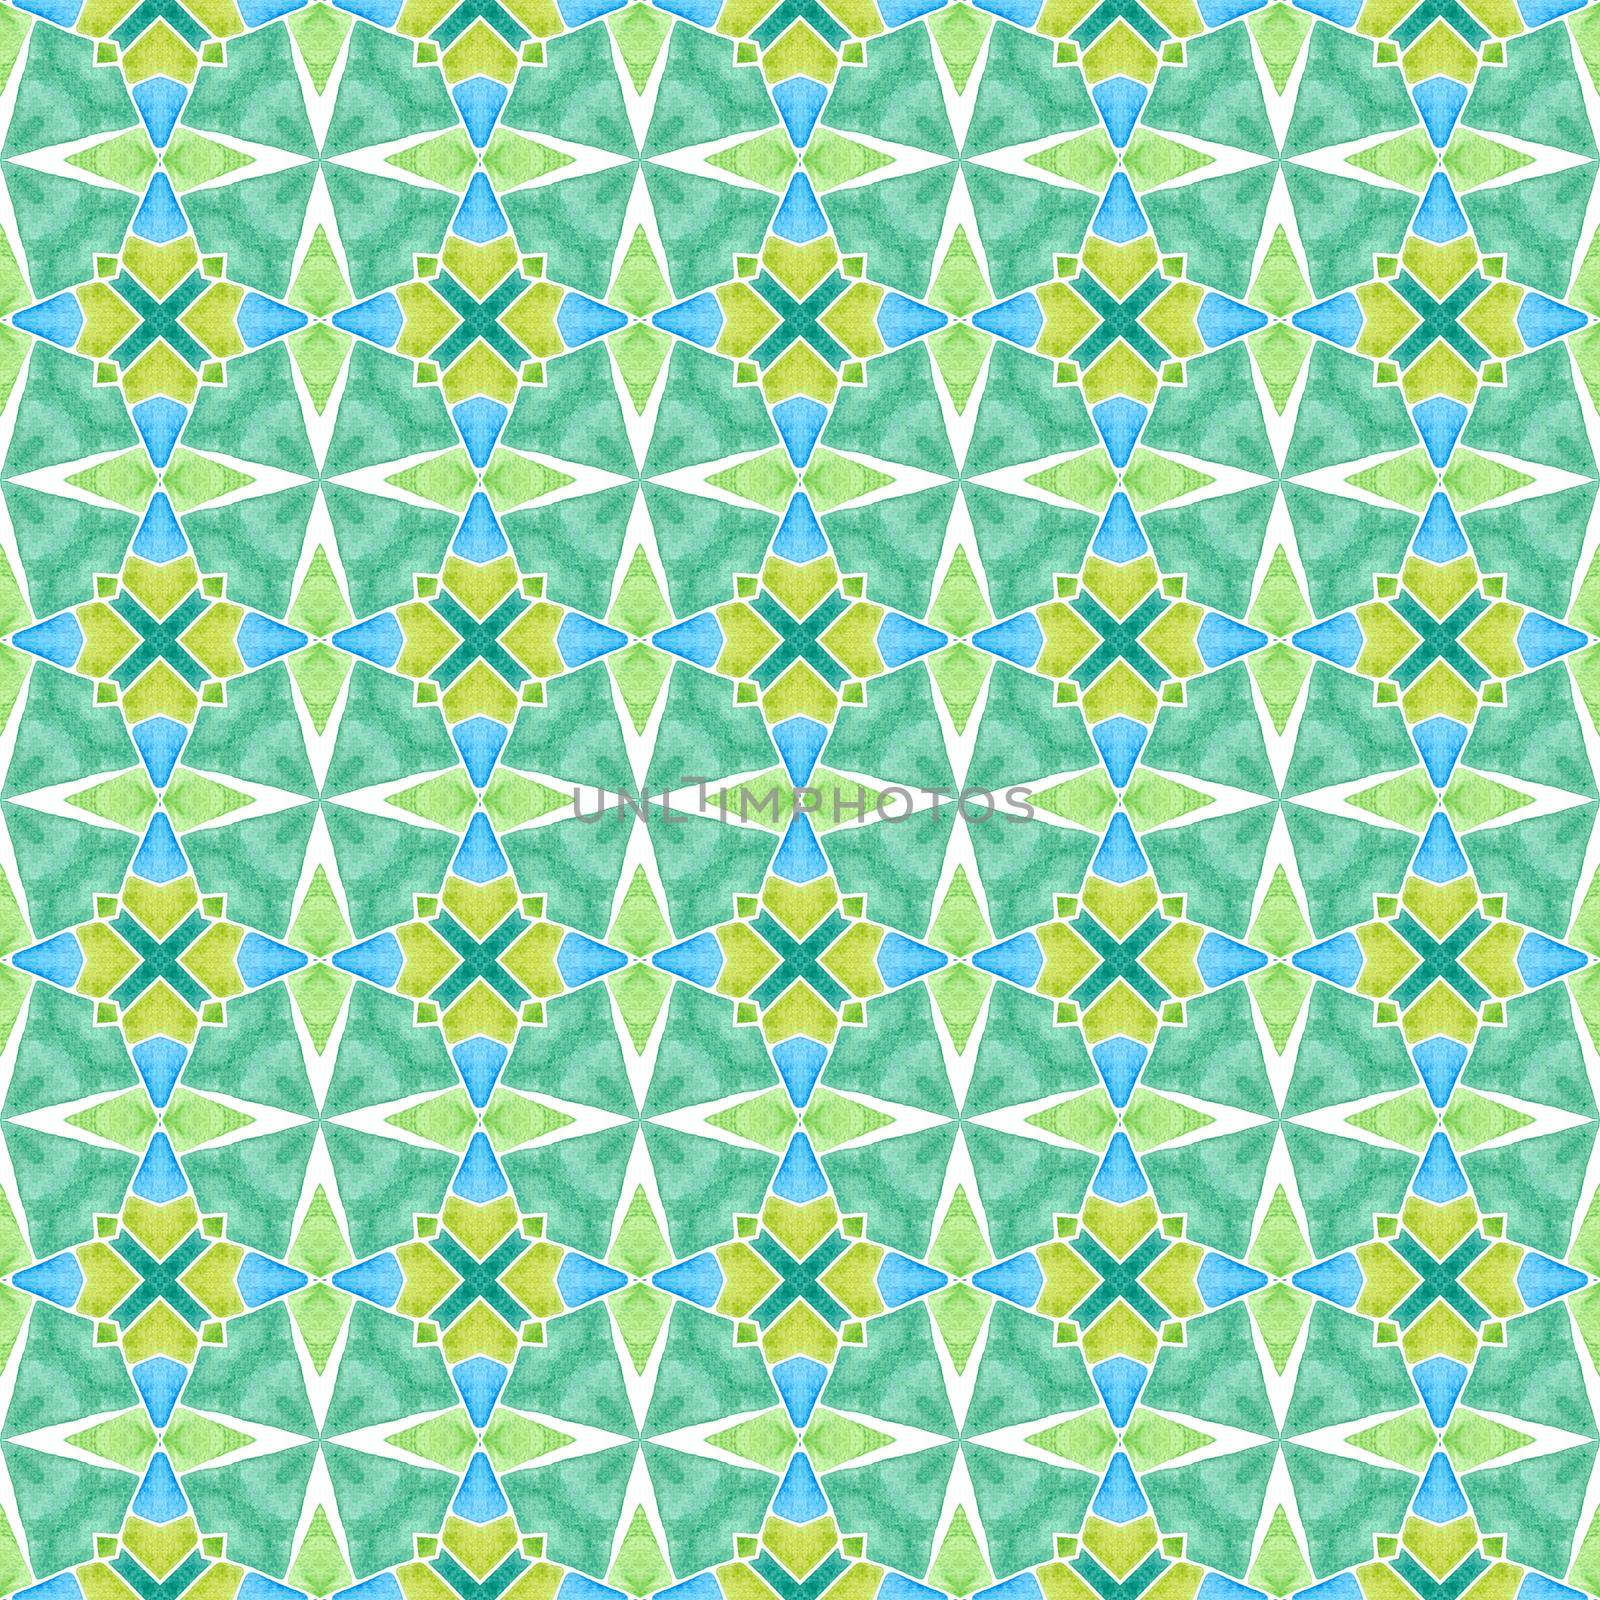 Green geometric chevron watercolor border. Green trending boho chic summer design. Textile ready Actual print, swimwear fabric, wallpaper, wrapping. Chevron watercolor pattern.